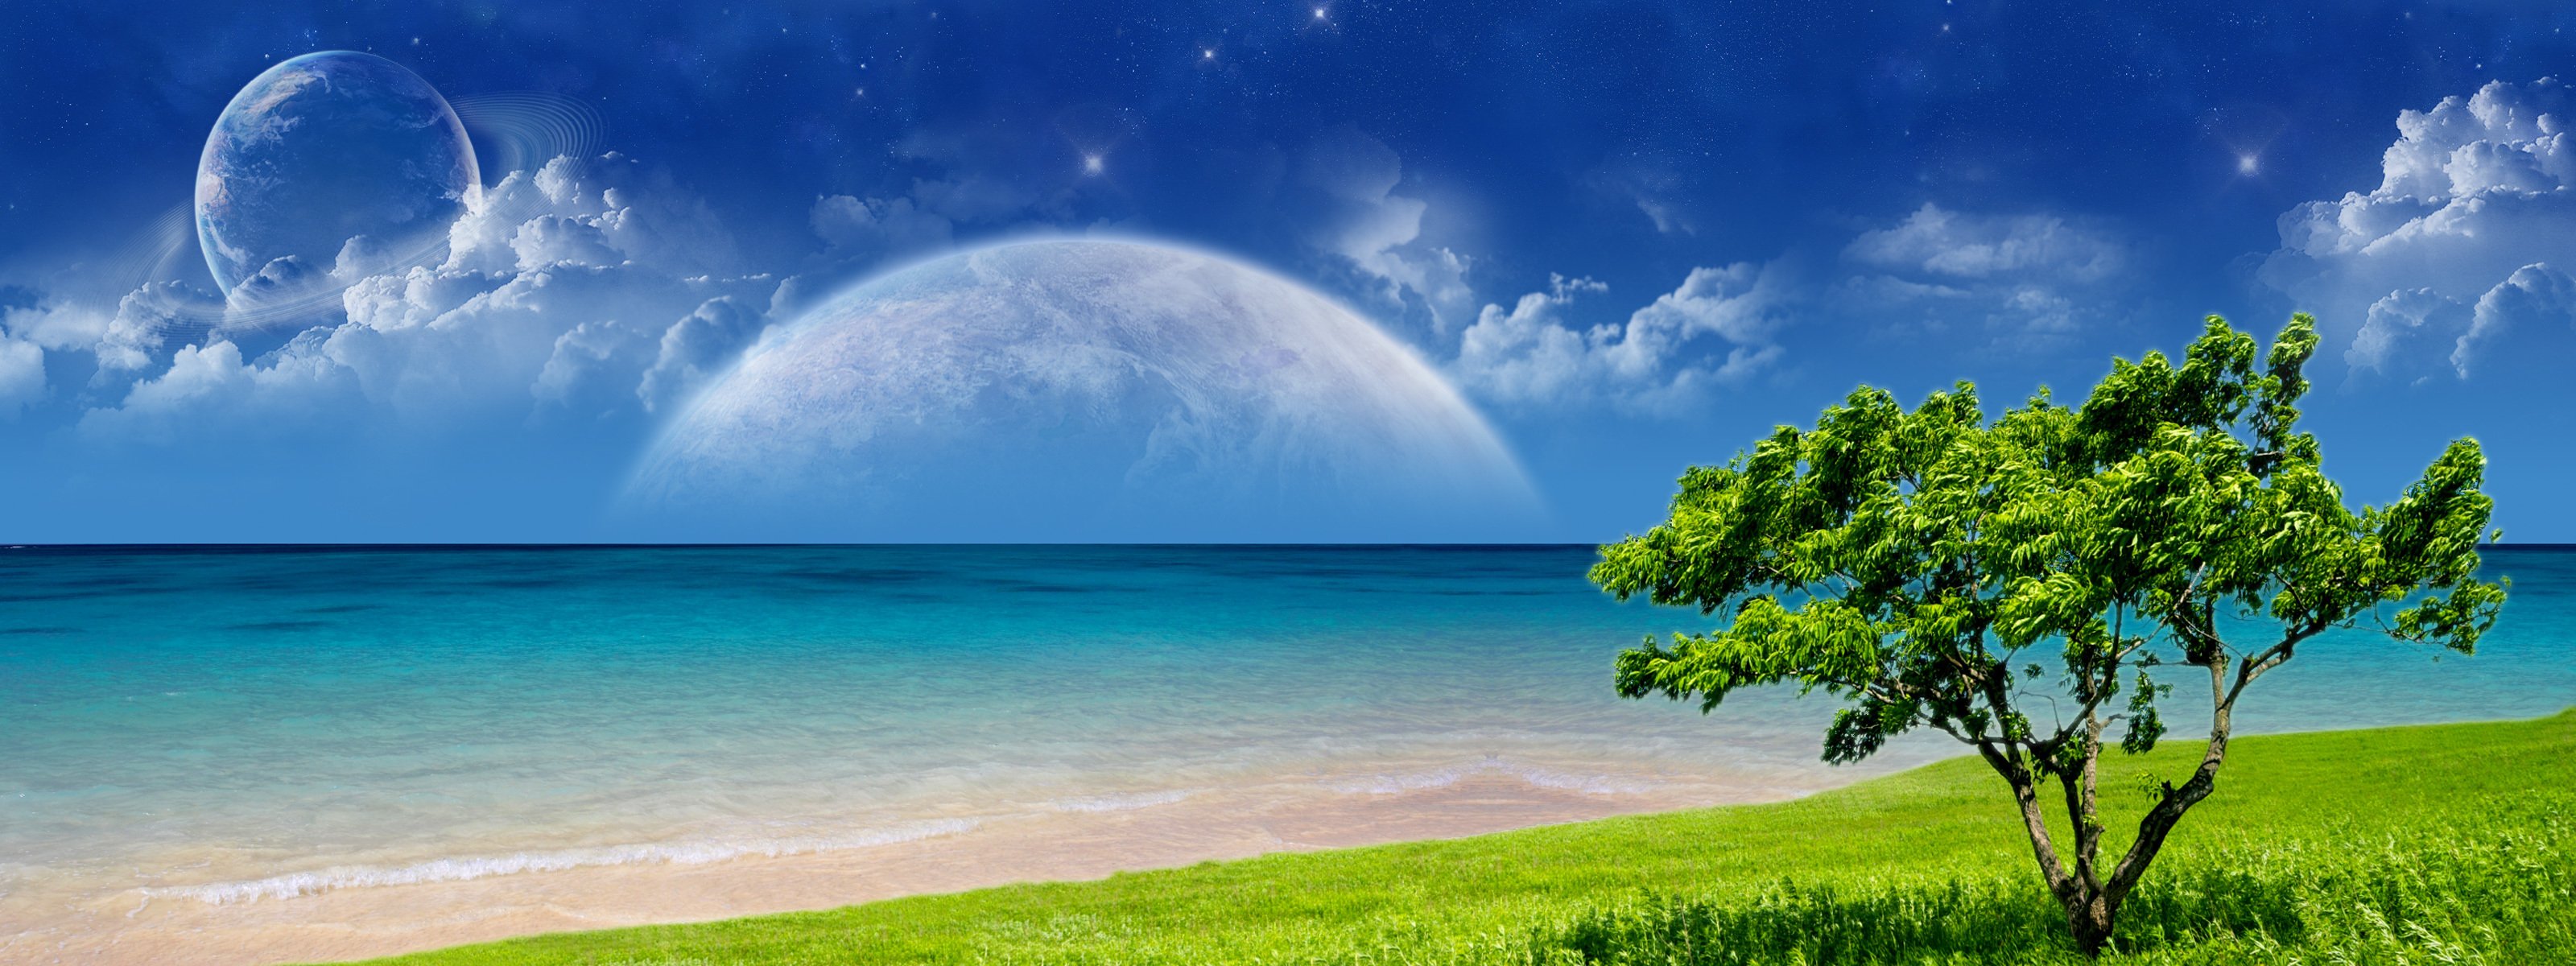 ocean plaża drzewo trawa niebo chmury planety